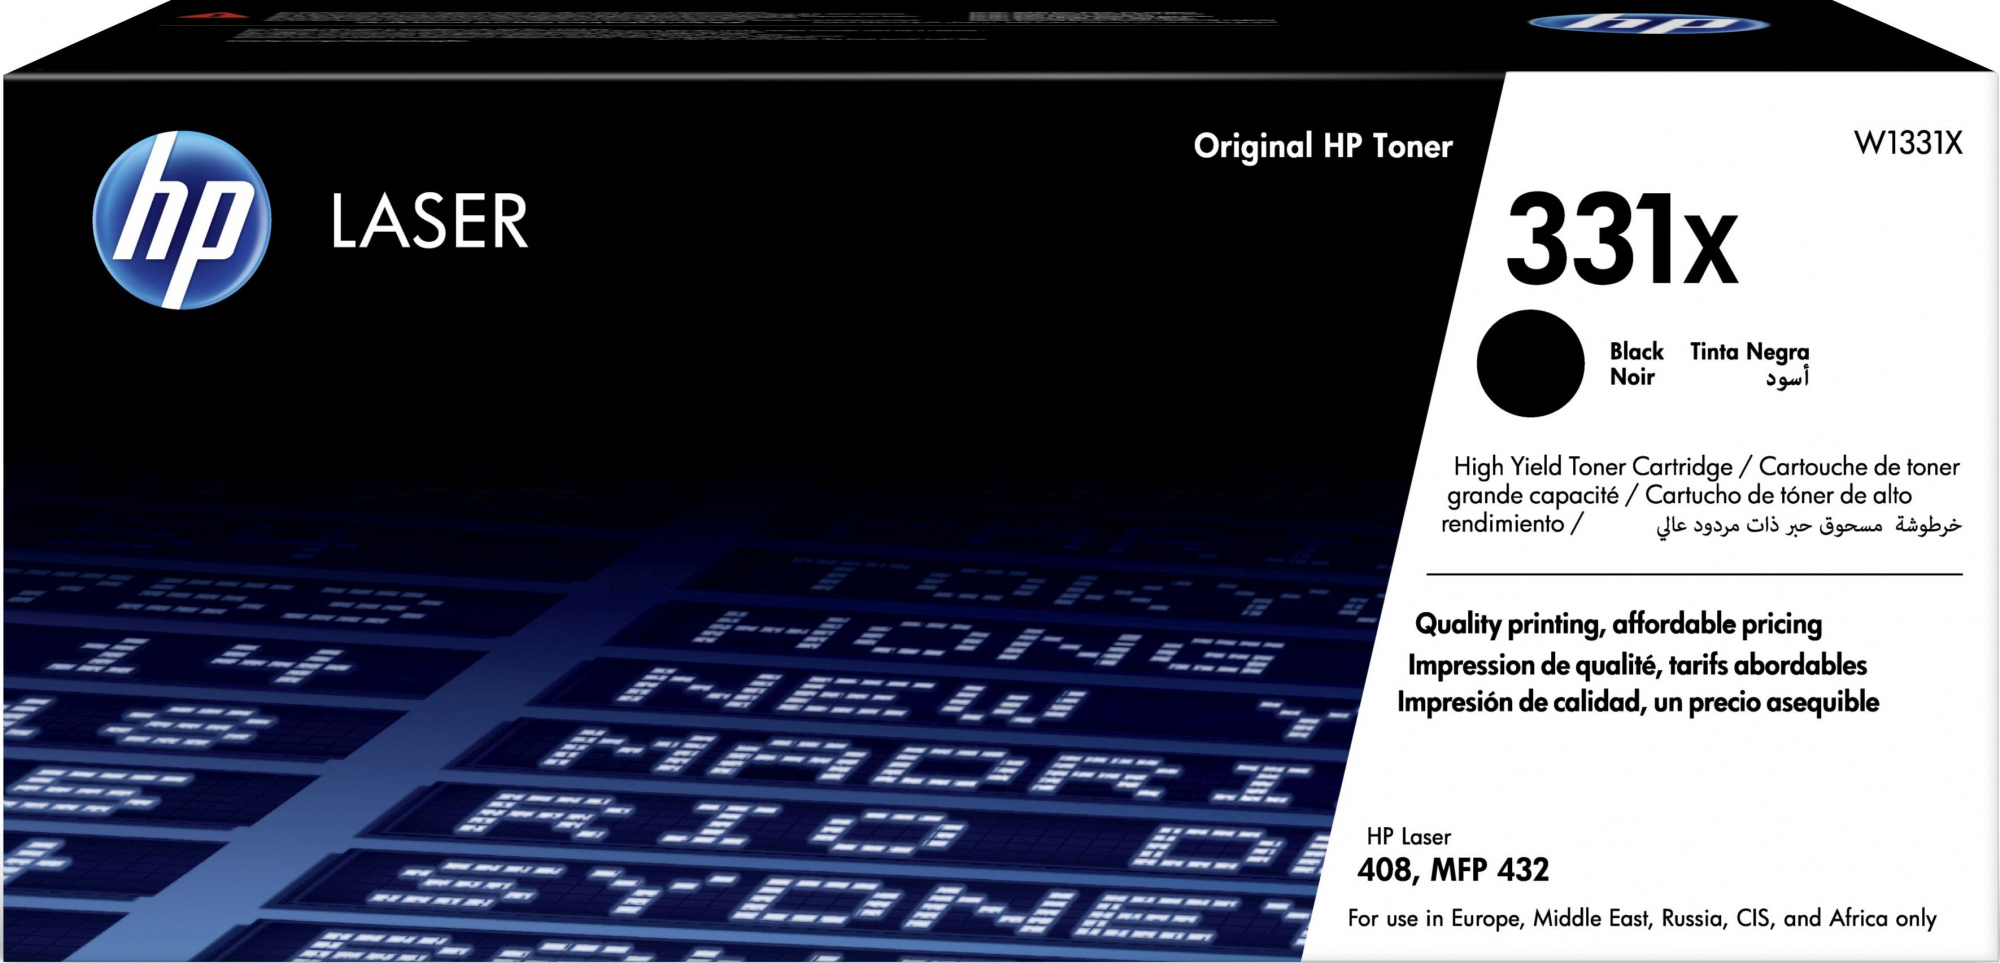 Картридж лазерный HP 331X W1331X черный (15000стр.) для HP Laser 408dn/MFP 432fdn